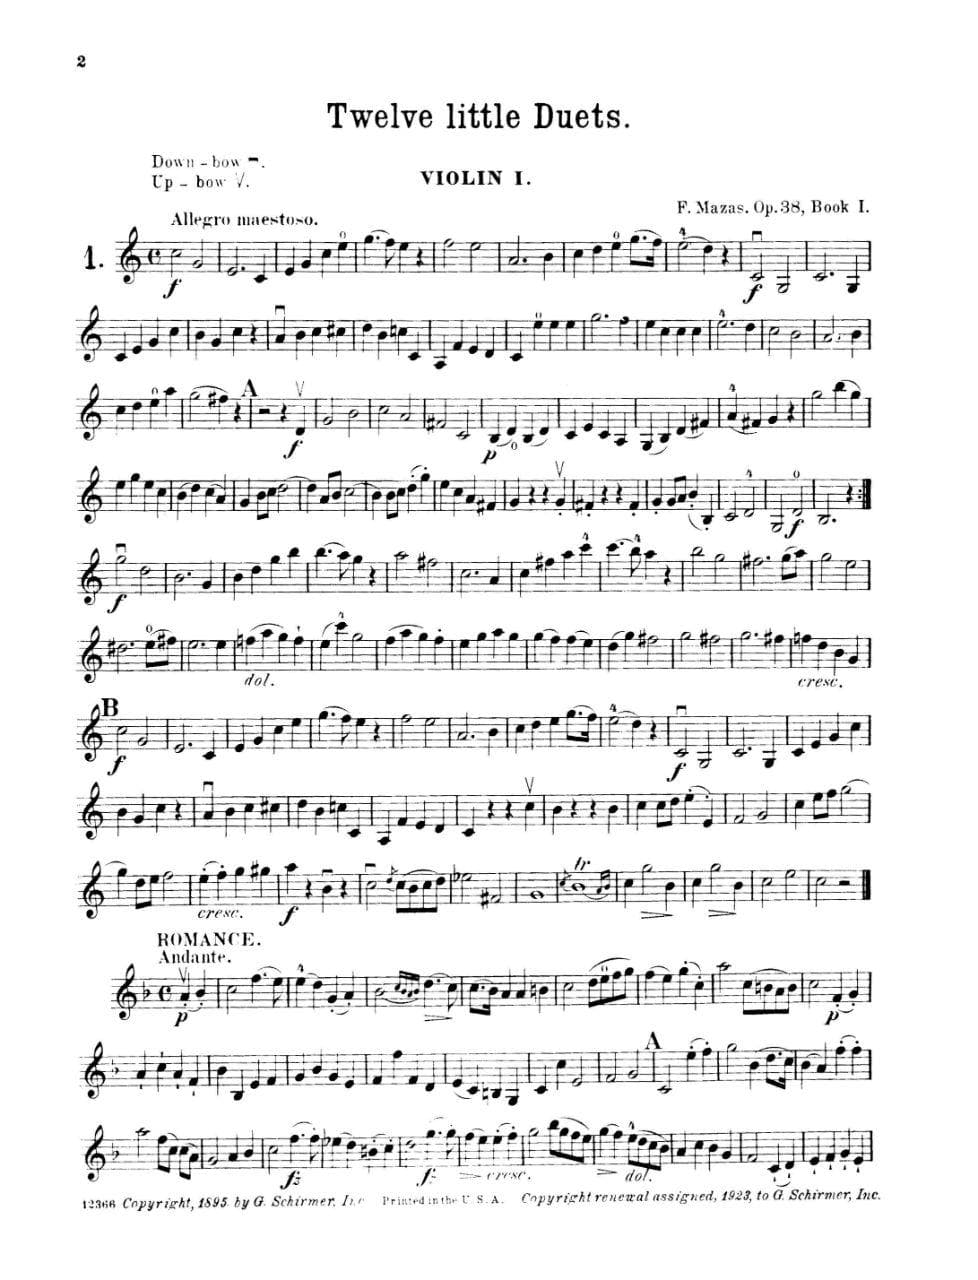 Mazas, Jacques Féréol - 12 Little Duets, Op 38, Book 1 - Two Violins - edited by Henry Schradieck - G Schirmer Edition